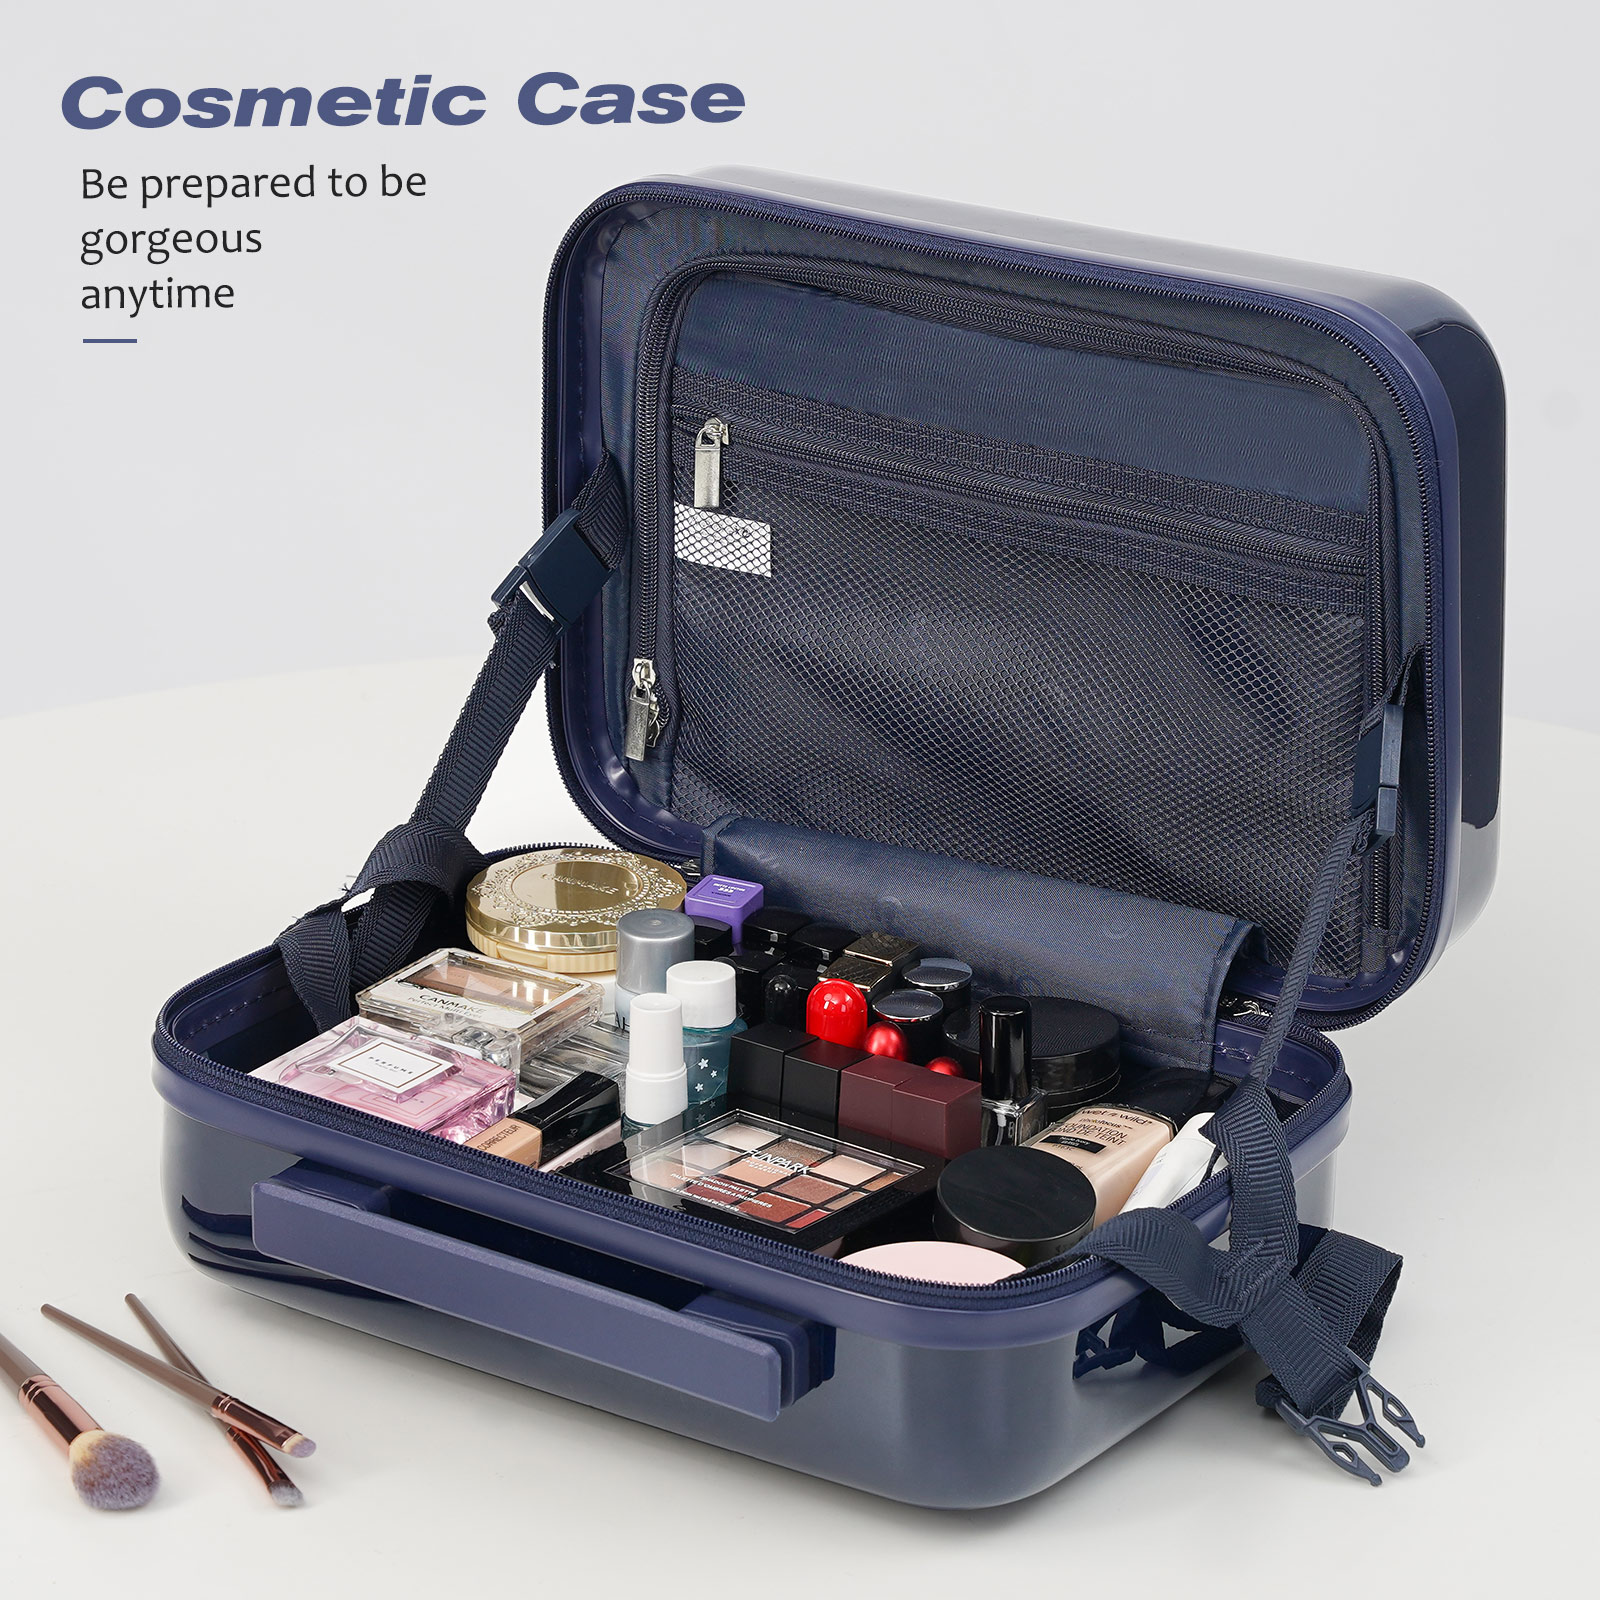  Coolife Suitcase Set 3 Piece Luggage Set Carry On Hardside  Luggage with TSA Lock Spinner Wheels (Navy, 3 piece set (DB/TB/20))